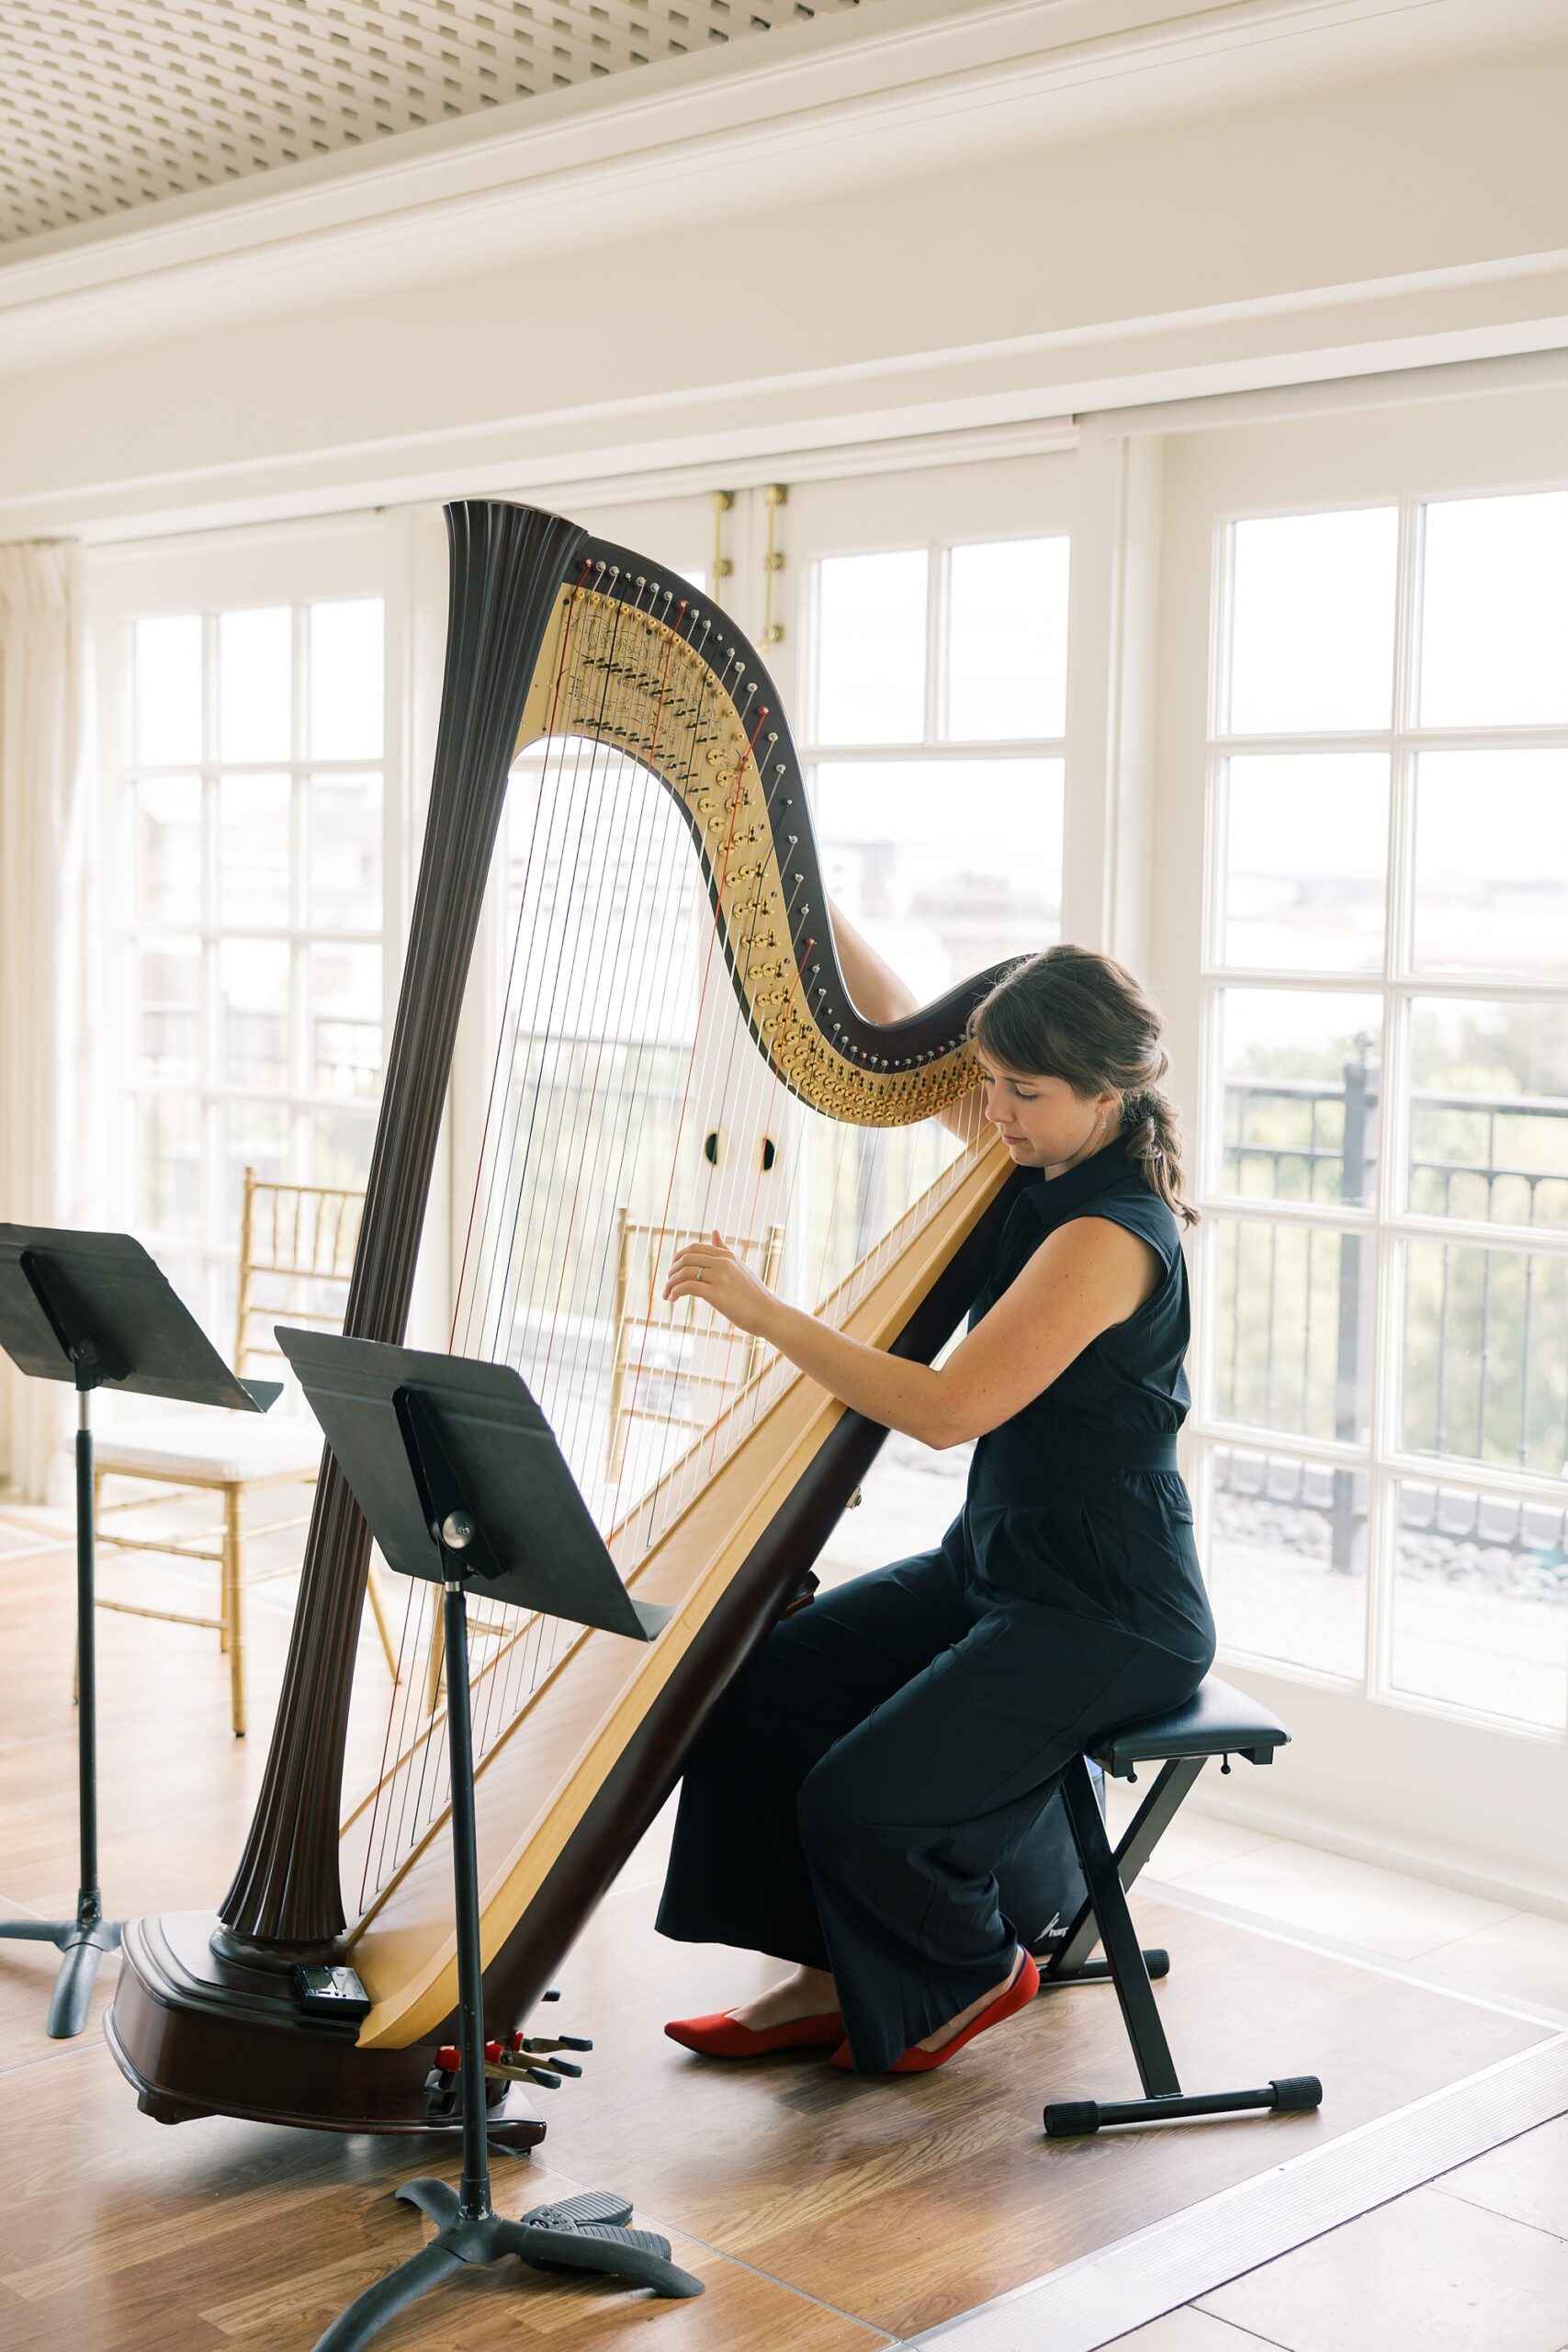 harpist performs during the Hay Adams Hotel wedding ceremony in Washington DC